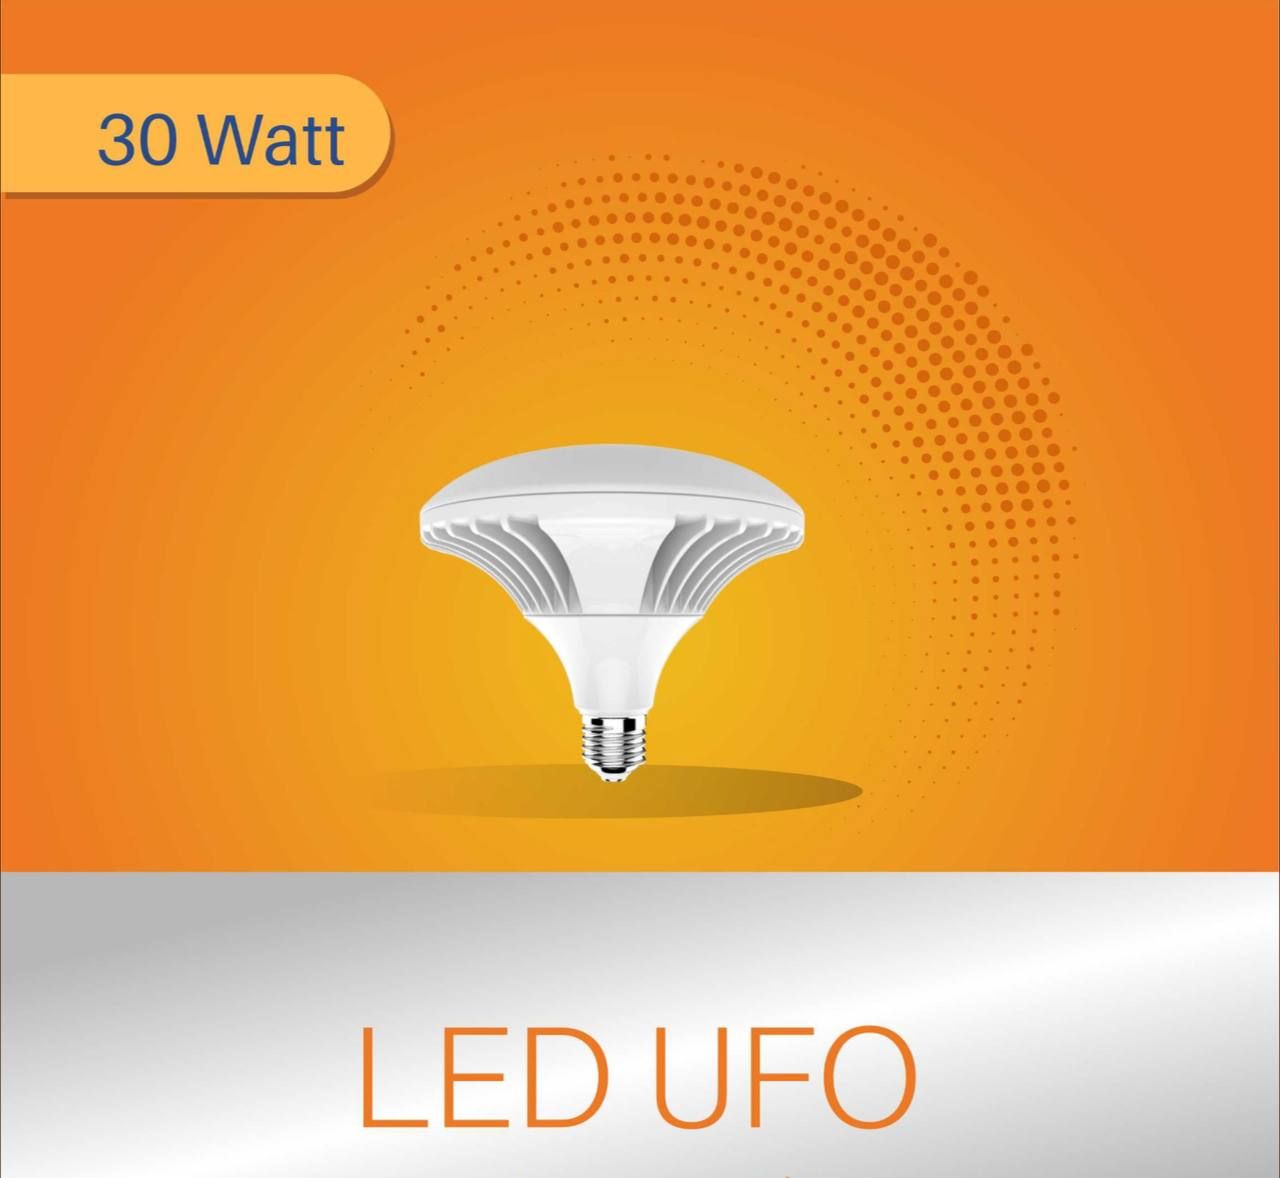 نمانور
LED UFO